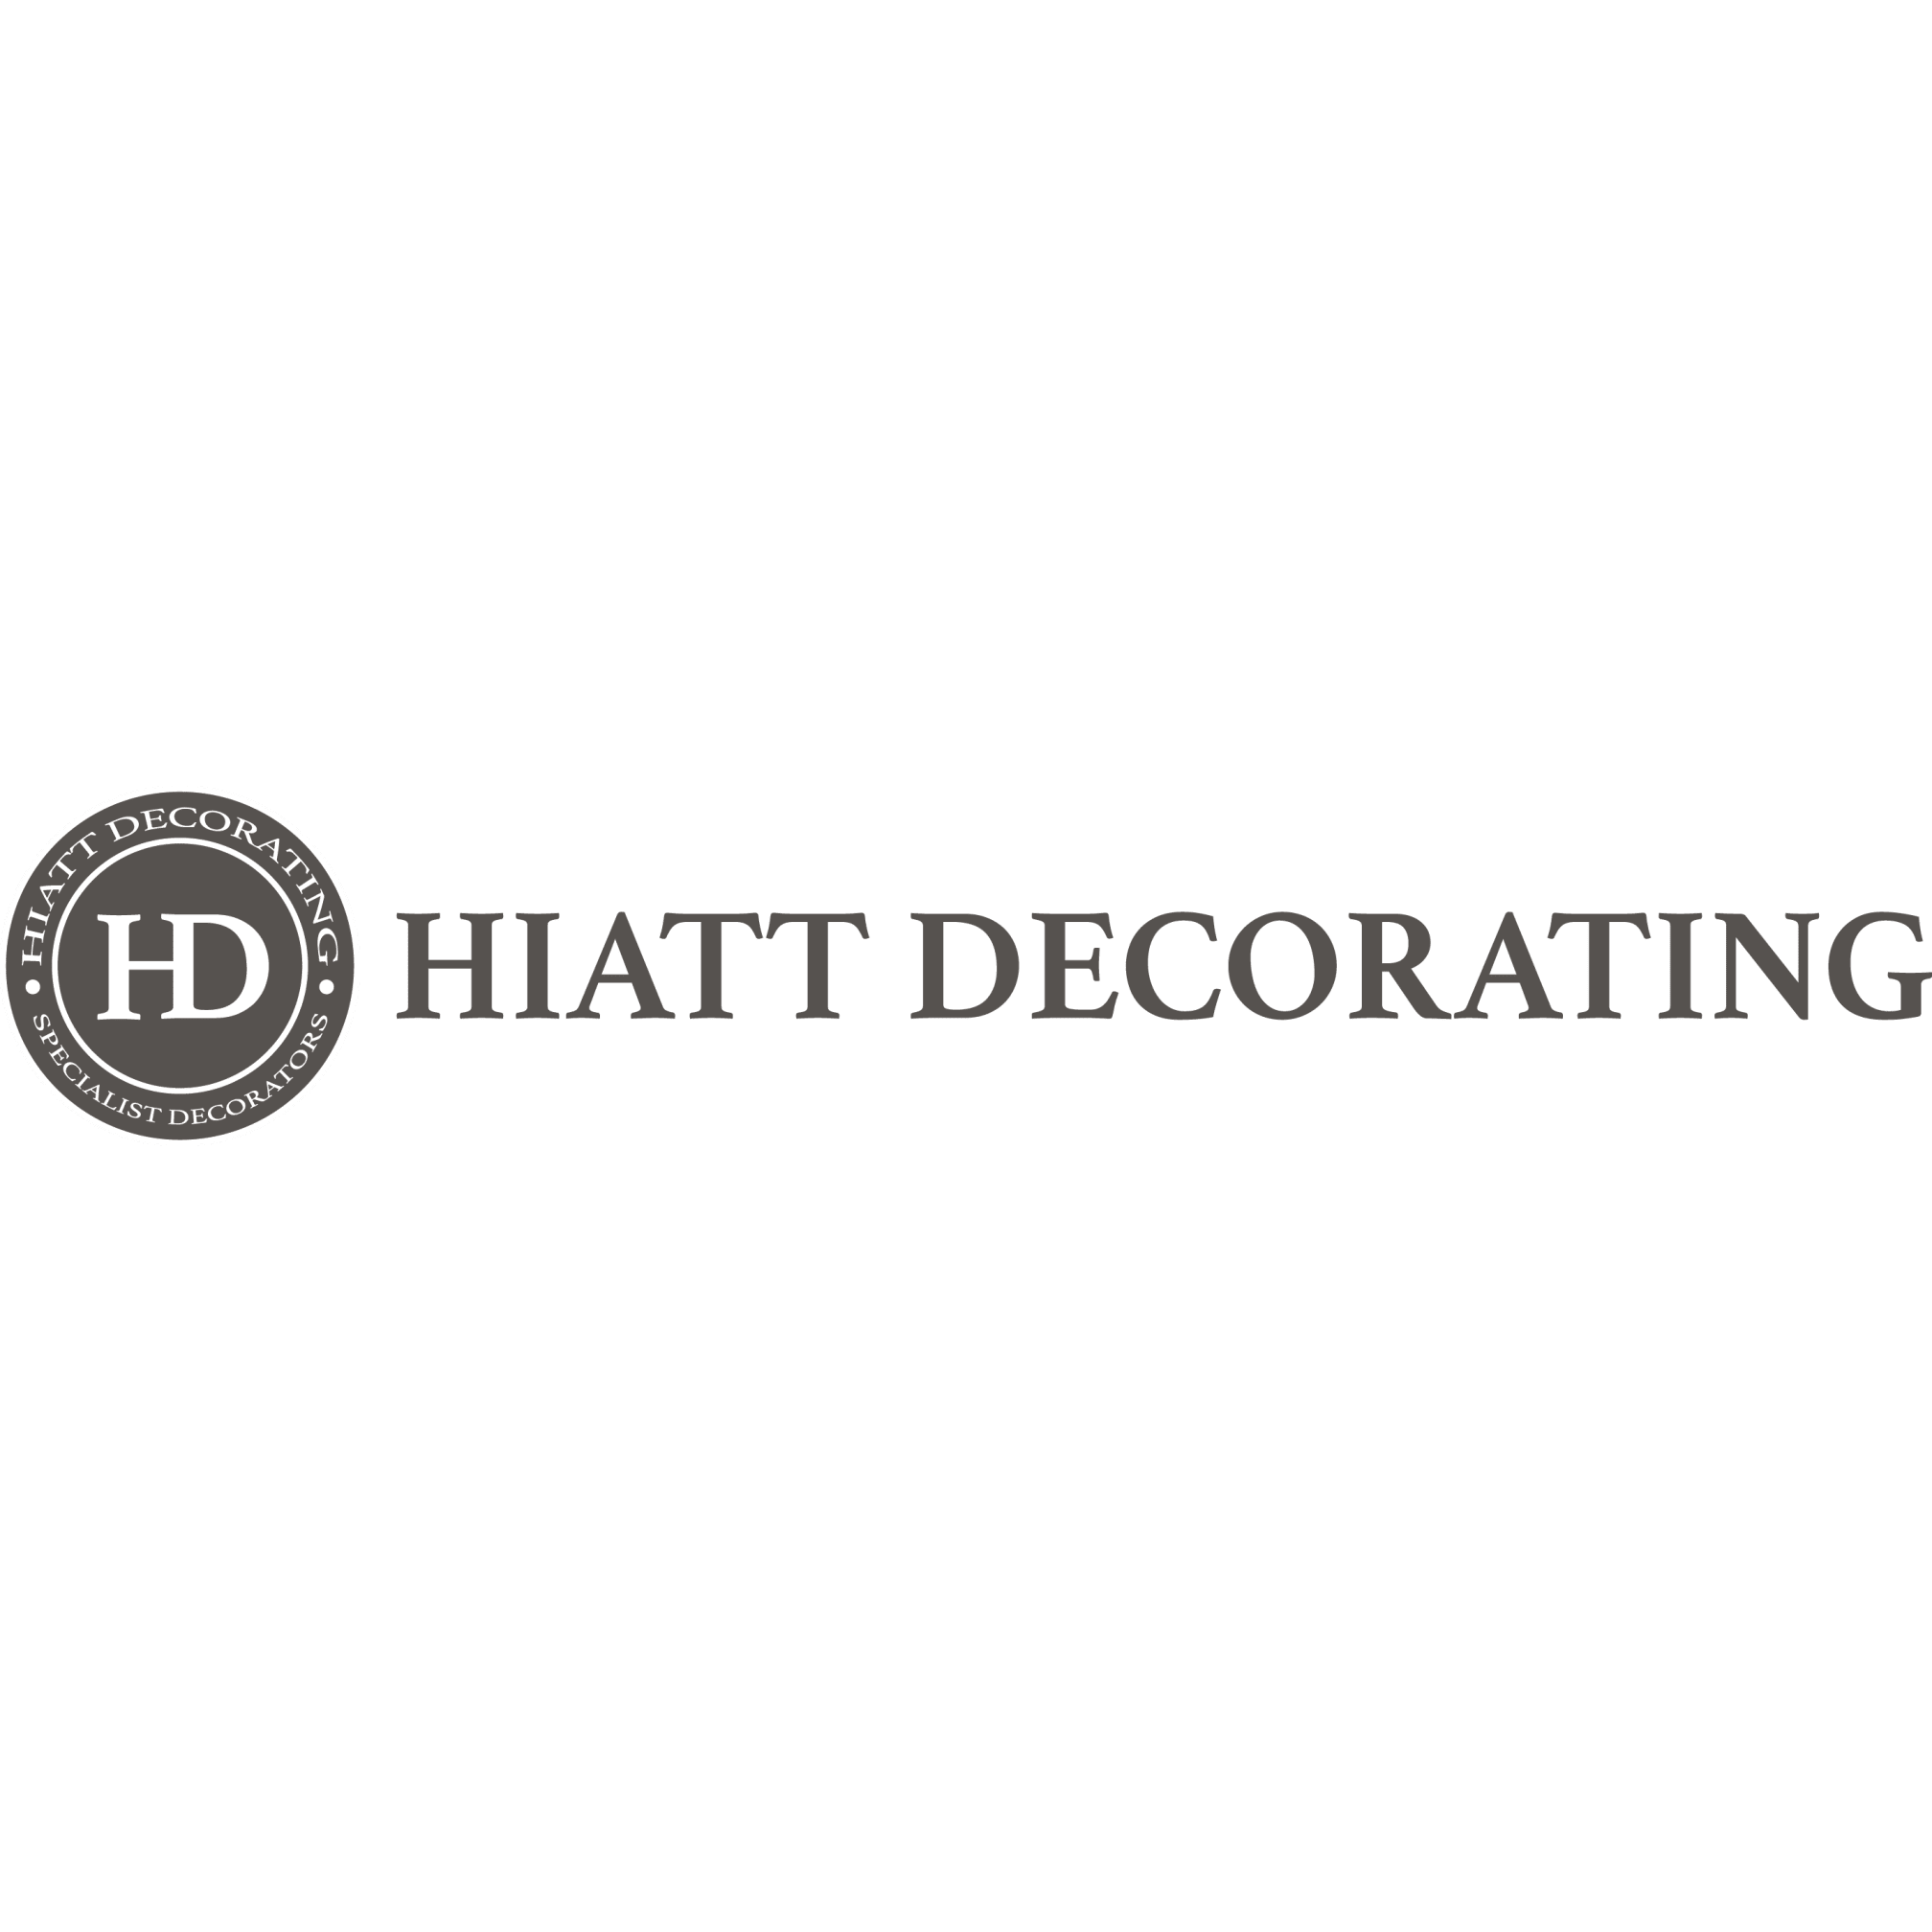 Hiatt Decorating Ltd - Lincoln, Lincolnshire LN6 7PU - 07525 250992 | ShowMeLocal.com